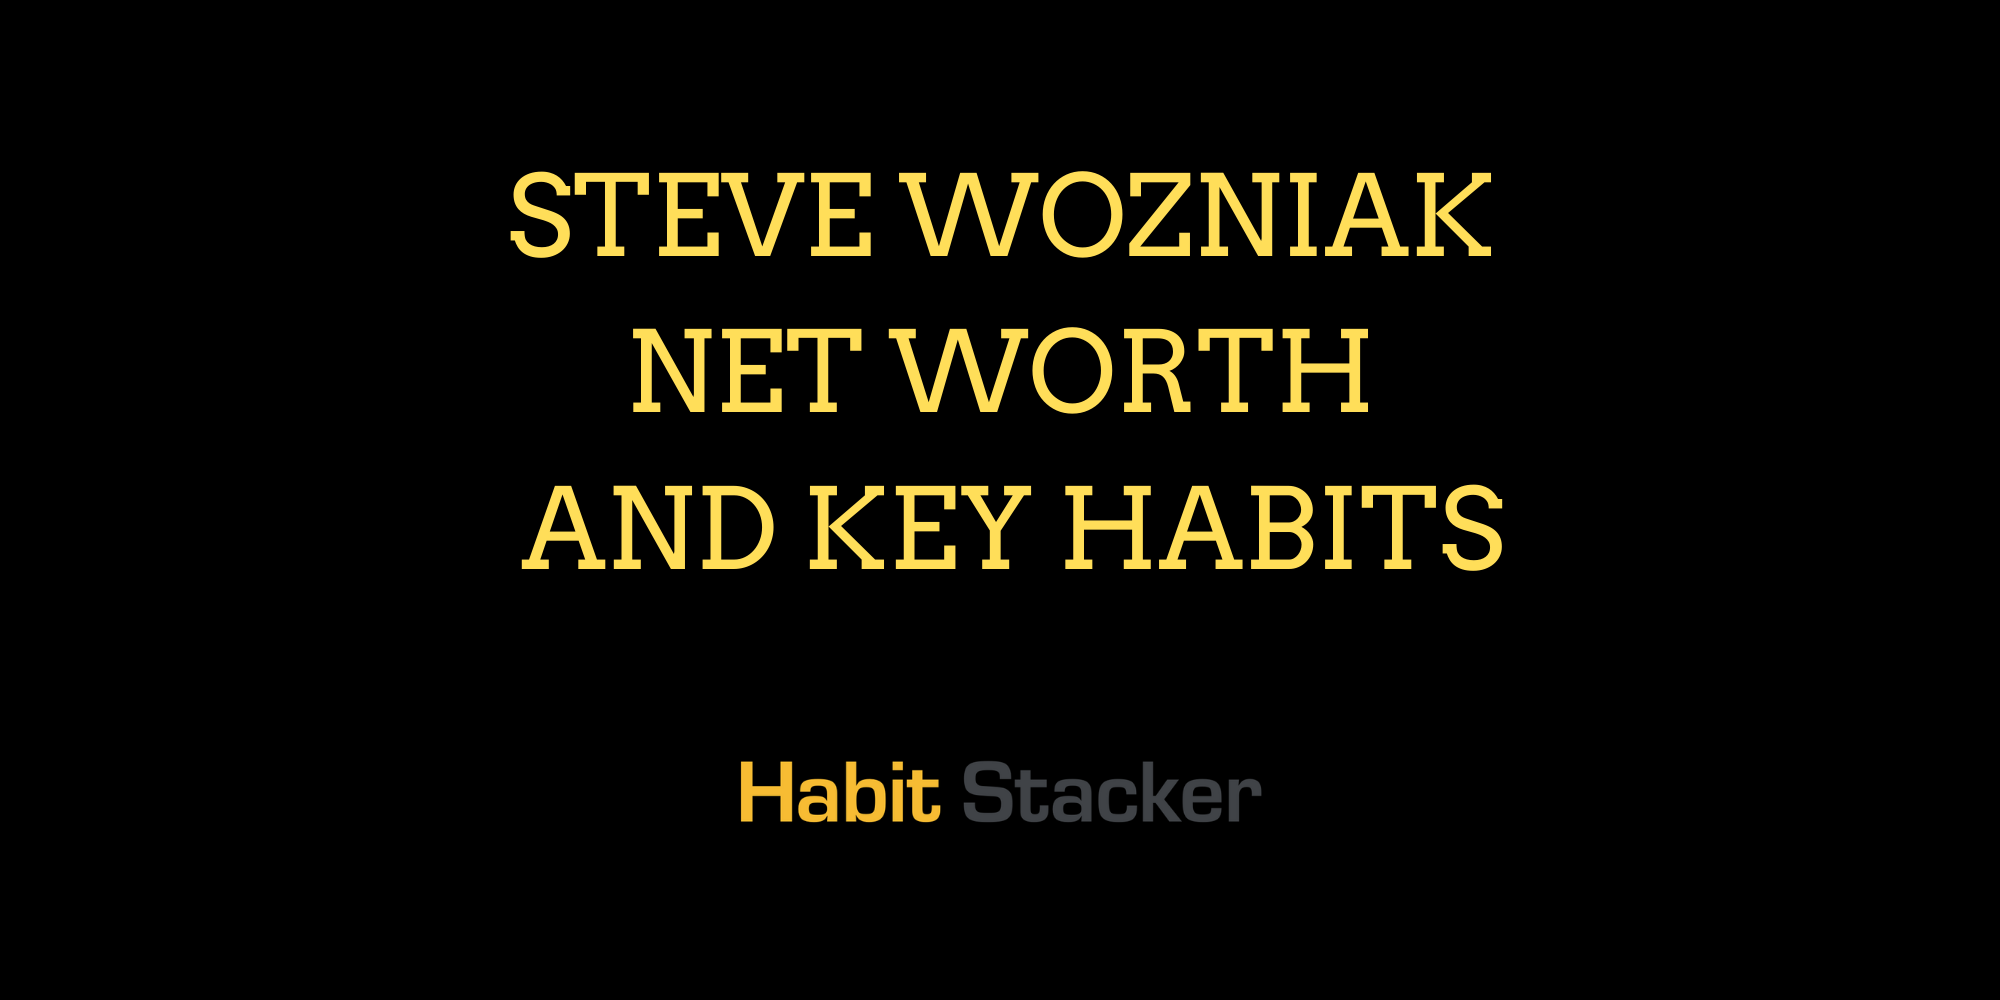 Steve Wozniak Net Worth and Key Habits